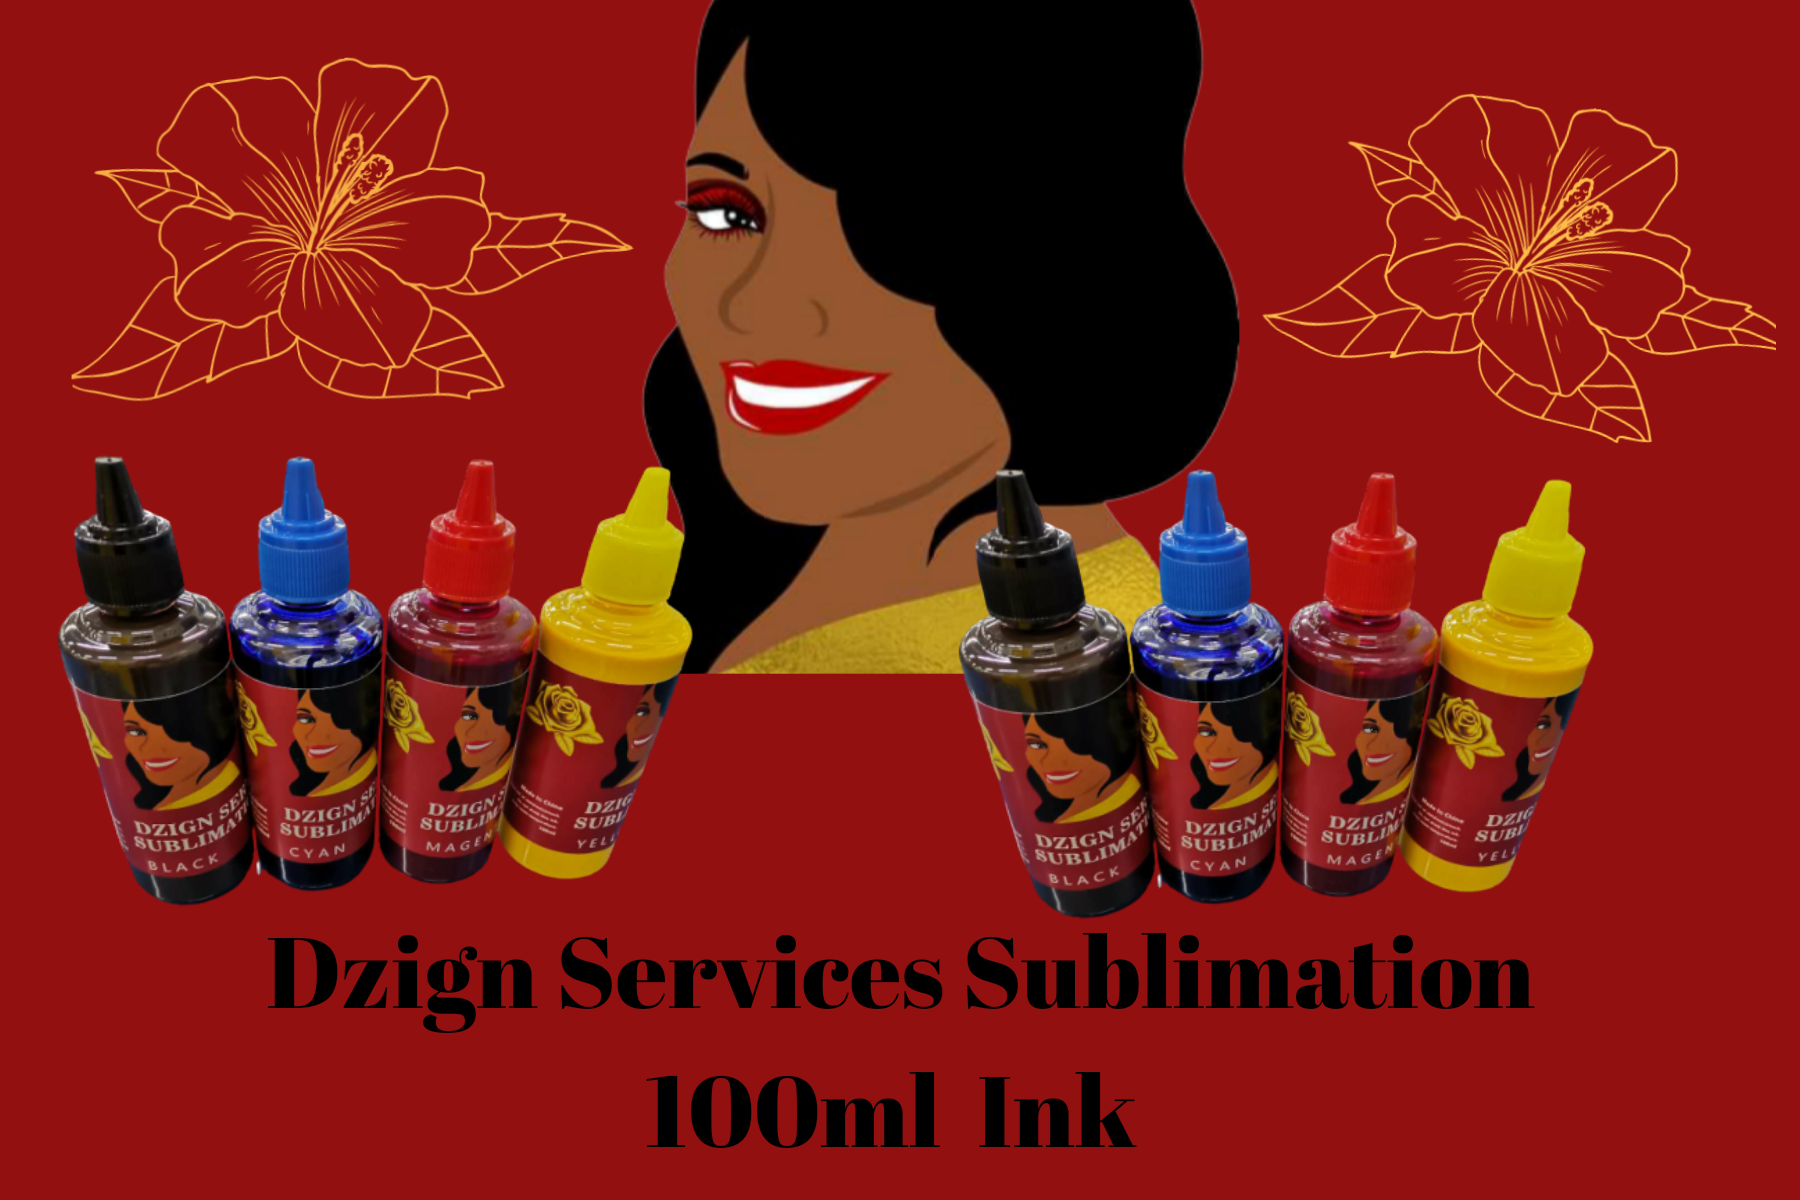 Dzign Services Sublimation Ink/Paper Starter Kit 13x19 ( Best